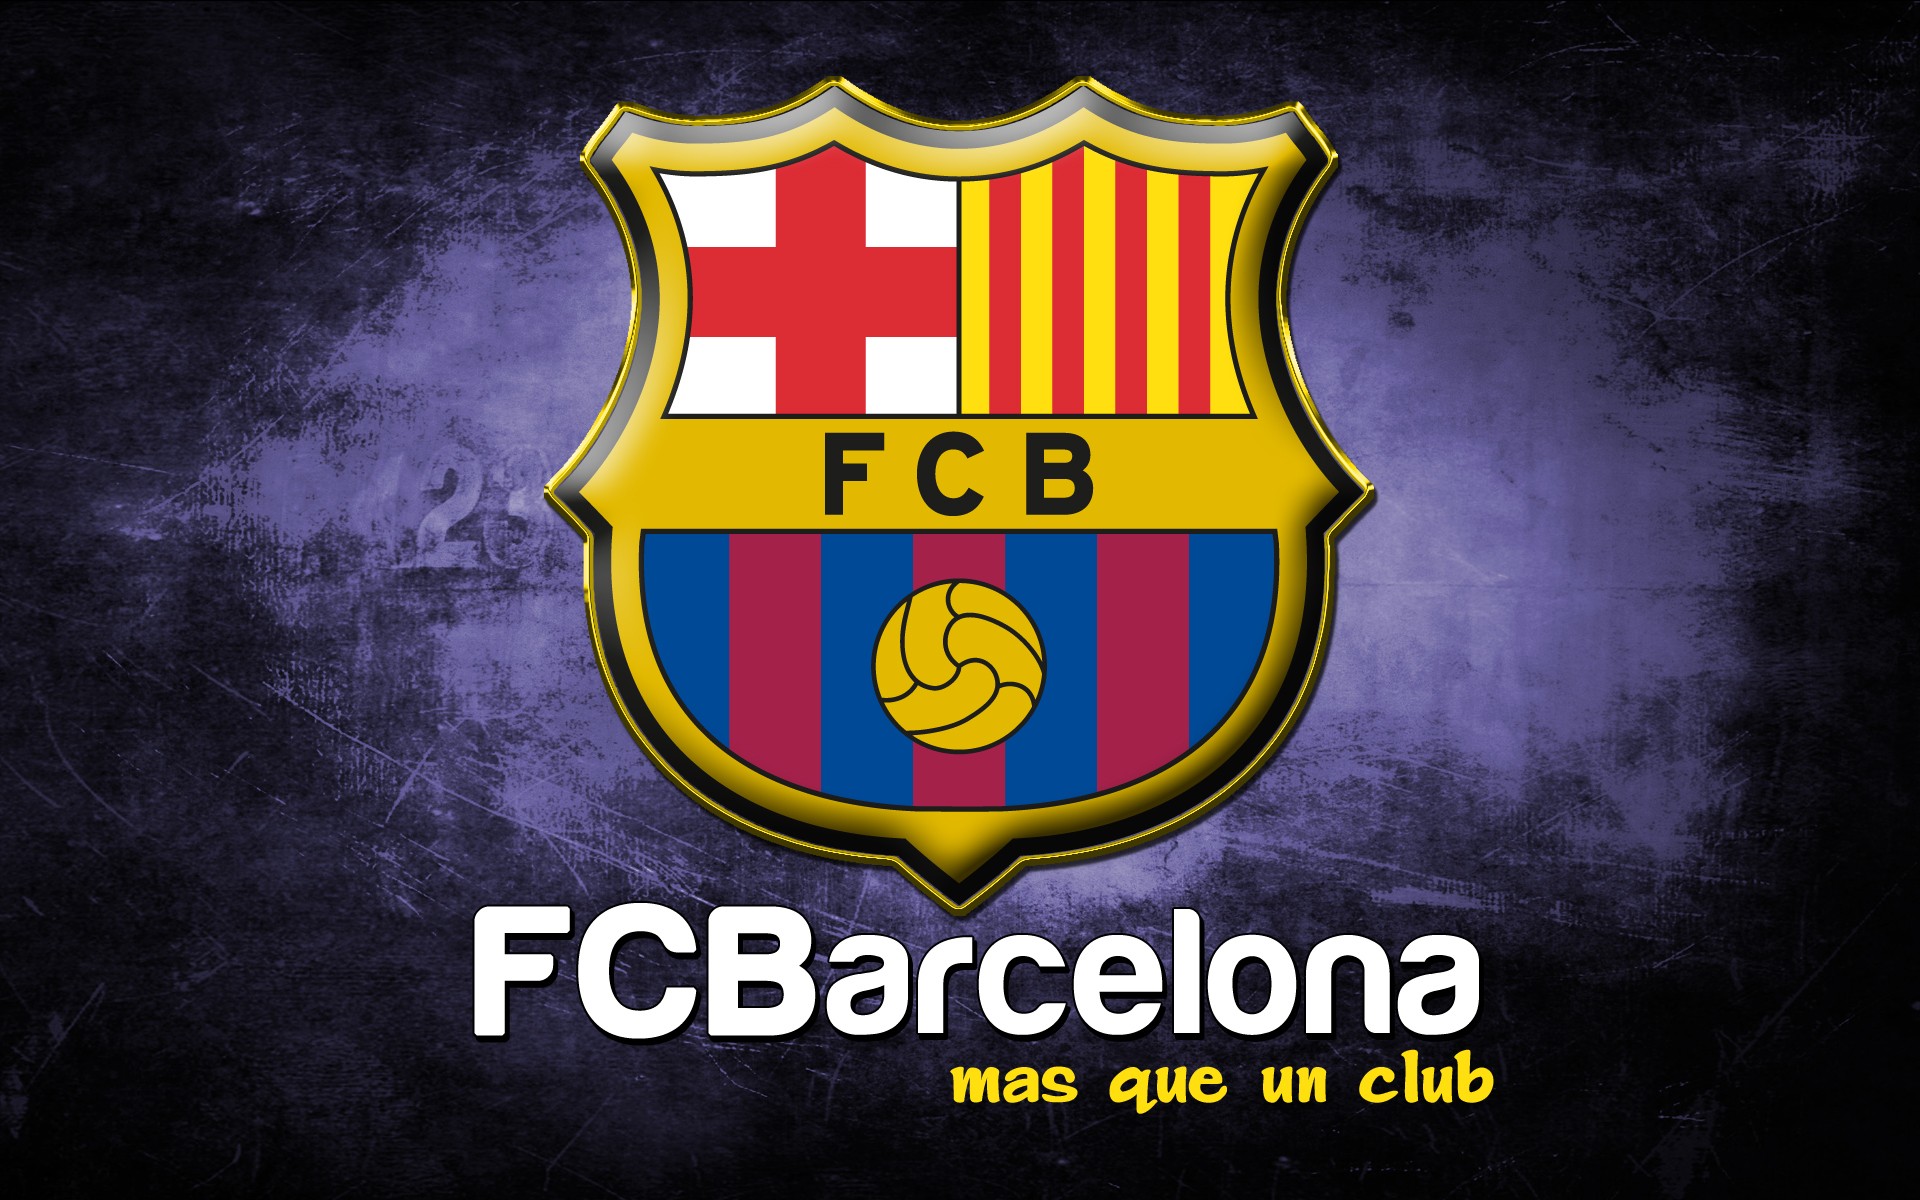 Messi Y El Barcelona Wallpaper Full HD Yapa